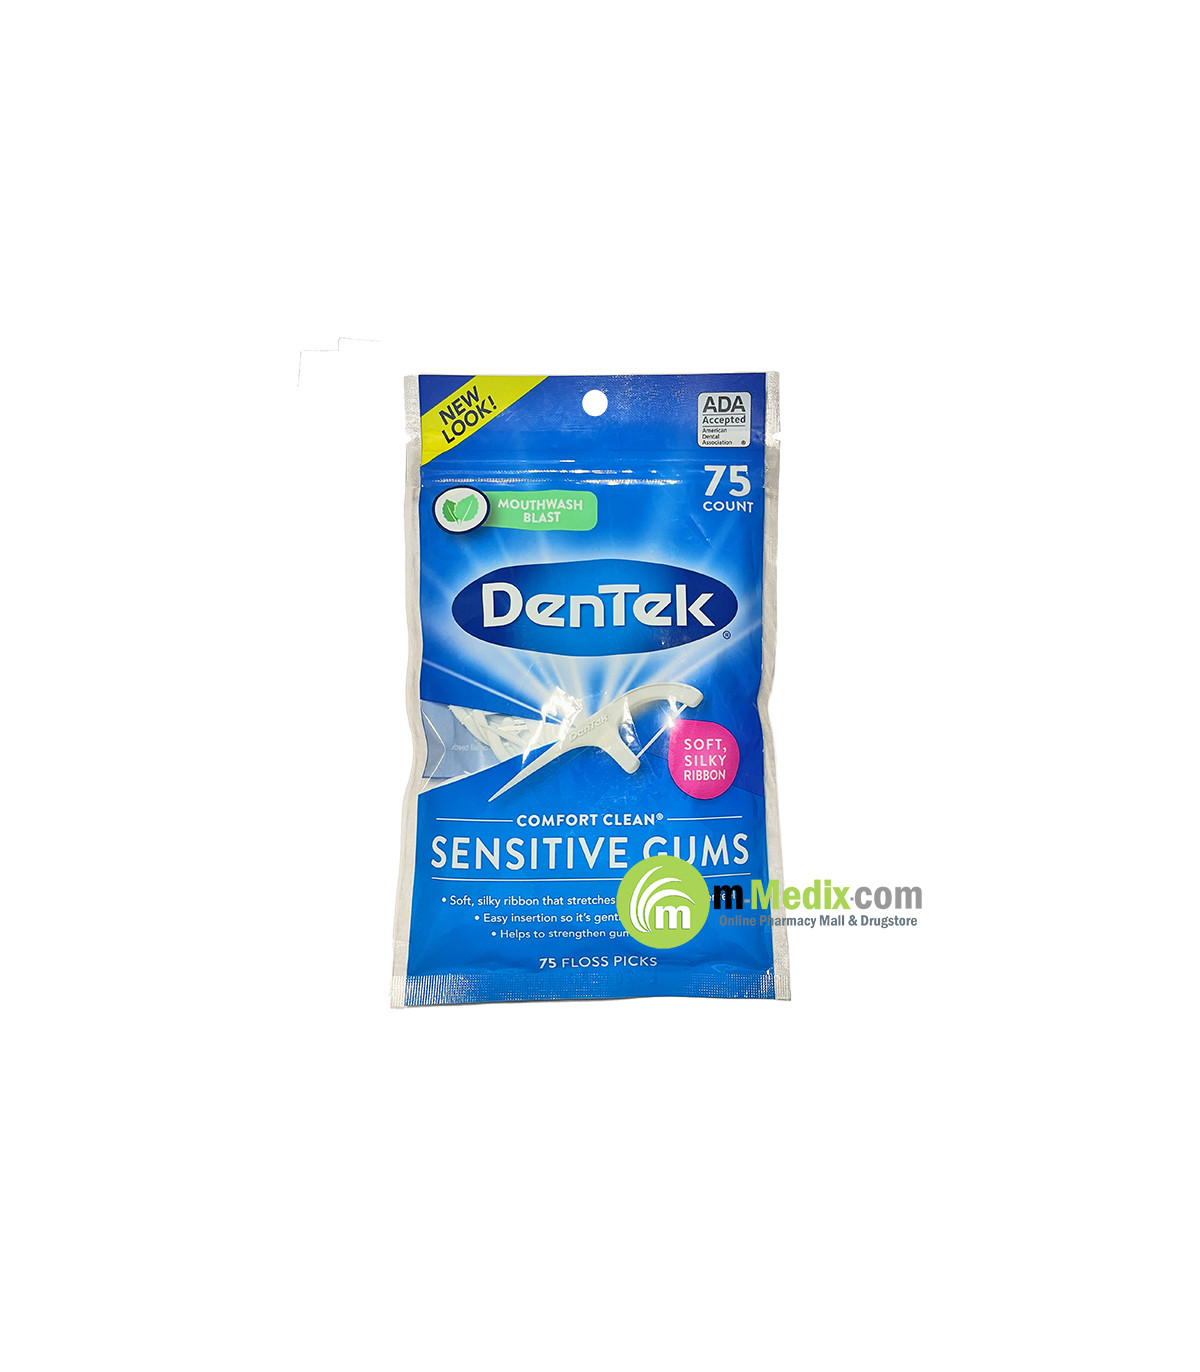 DenTek Comfort Clean Sensitive Gums – 75 Floss Picks